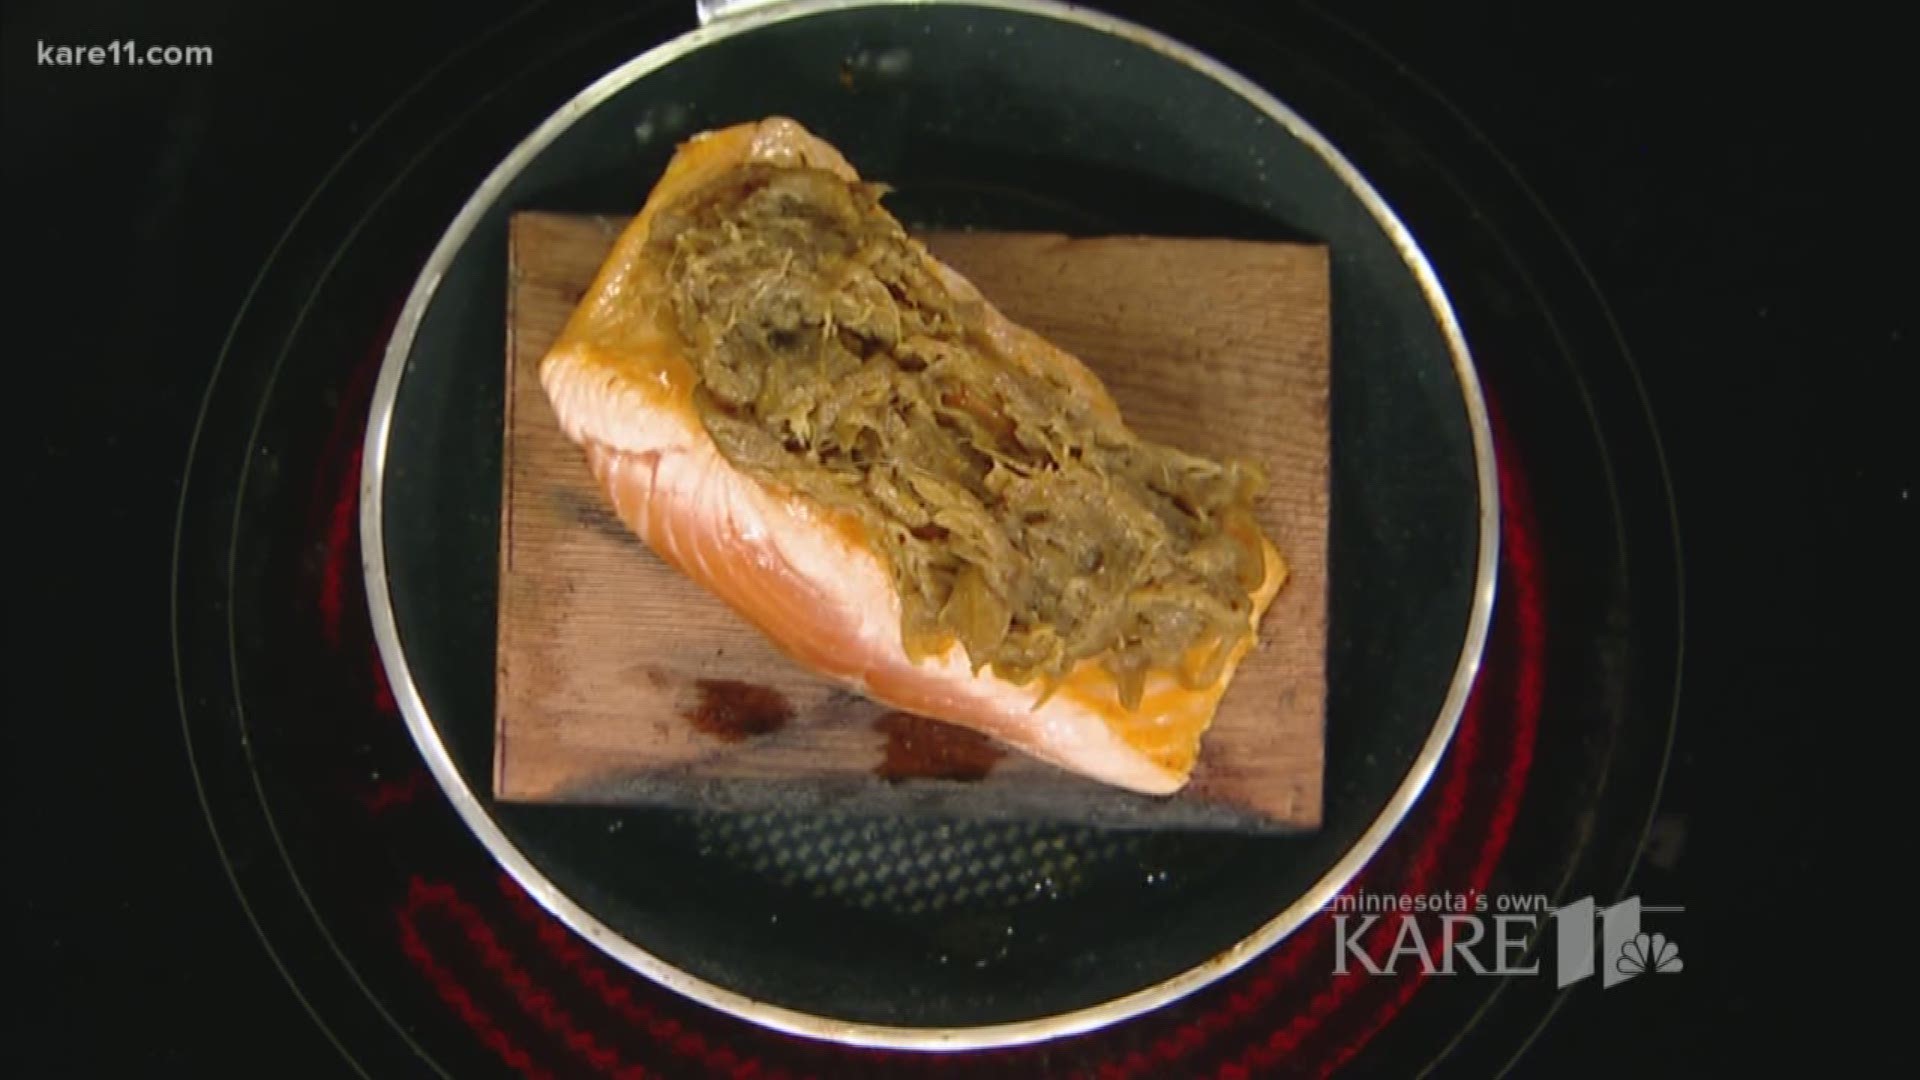 Cedar plank salmon recipe from Lela Restaurant